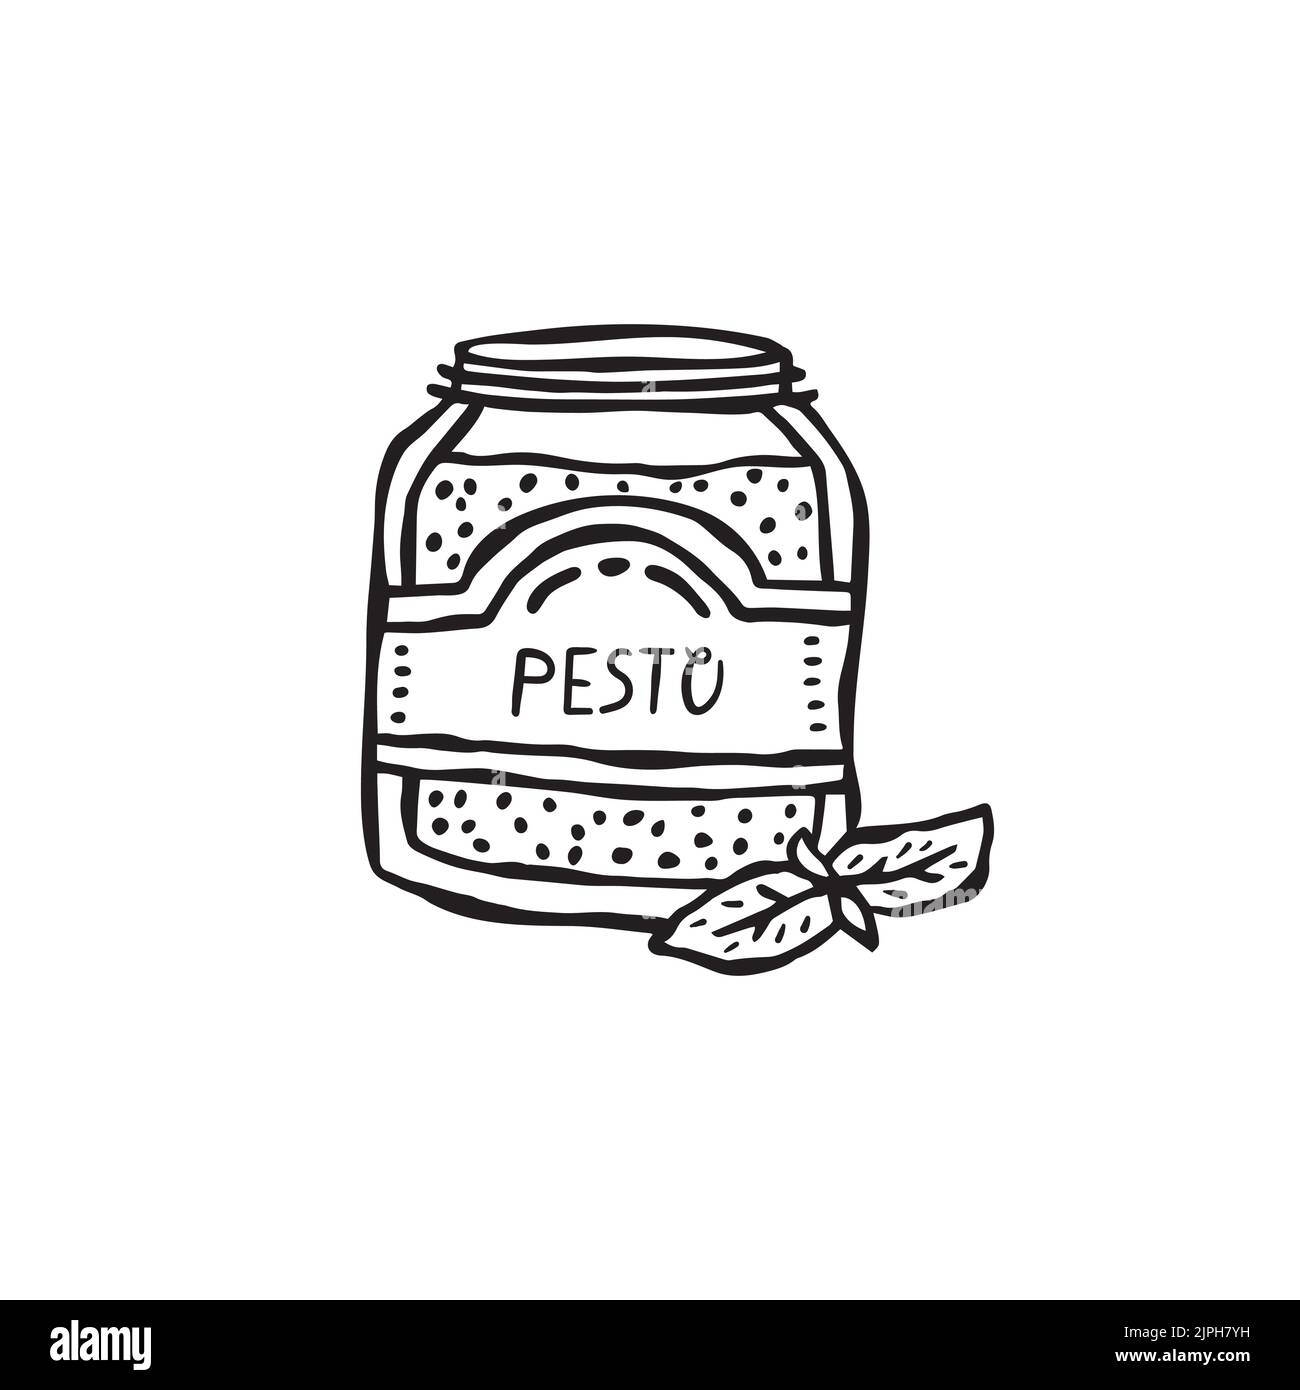 Vector hand-drawn illustration of Italian cuisine. Pesto Stock Vector